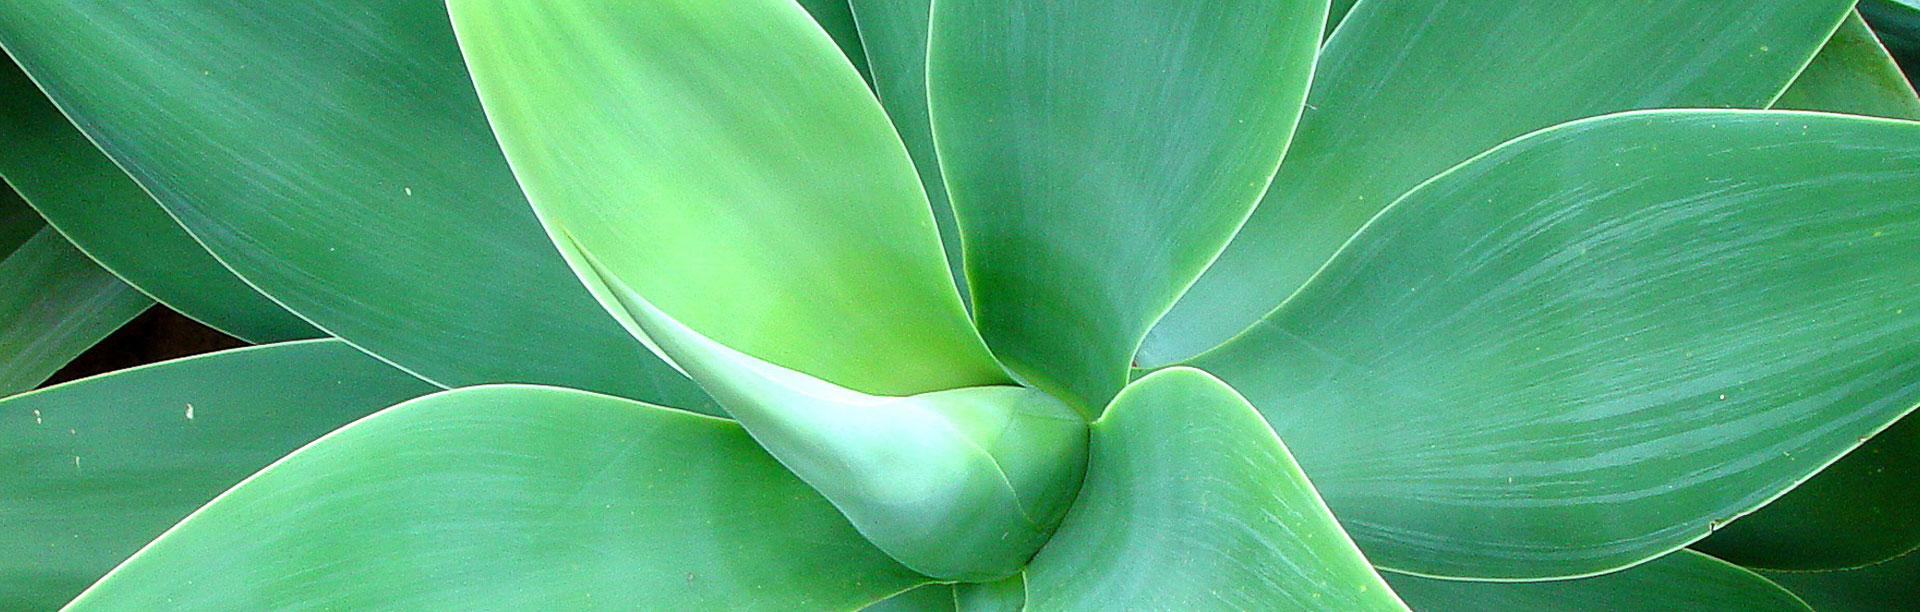 green plant close up